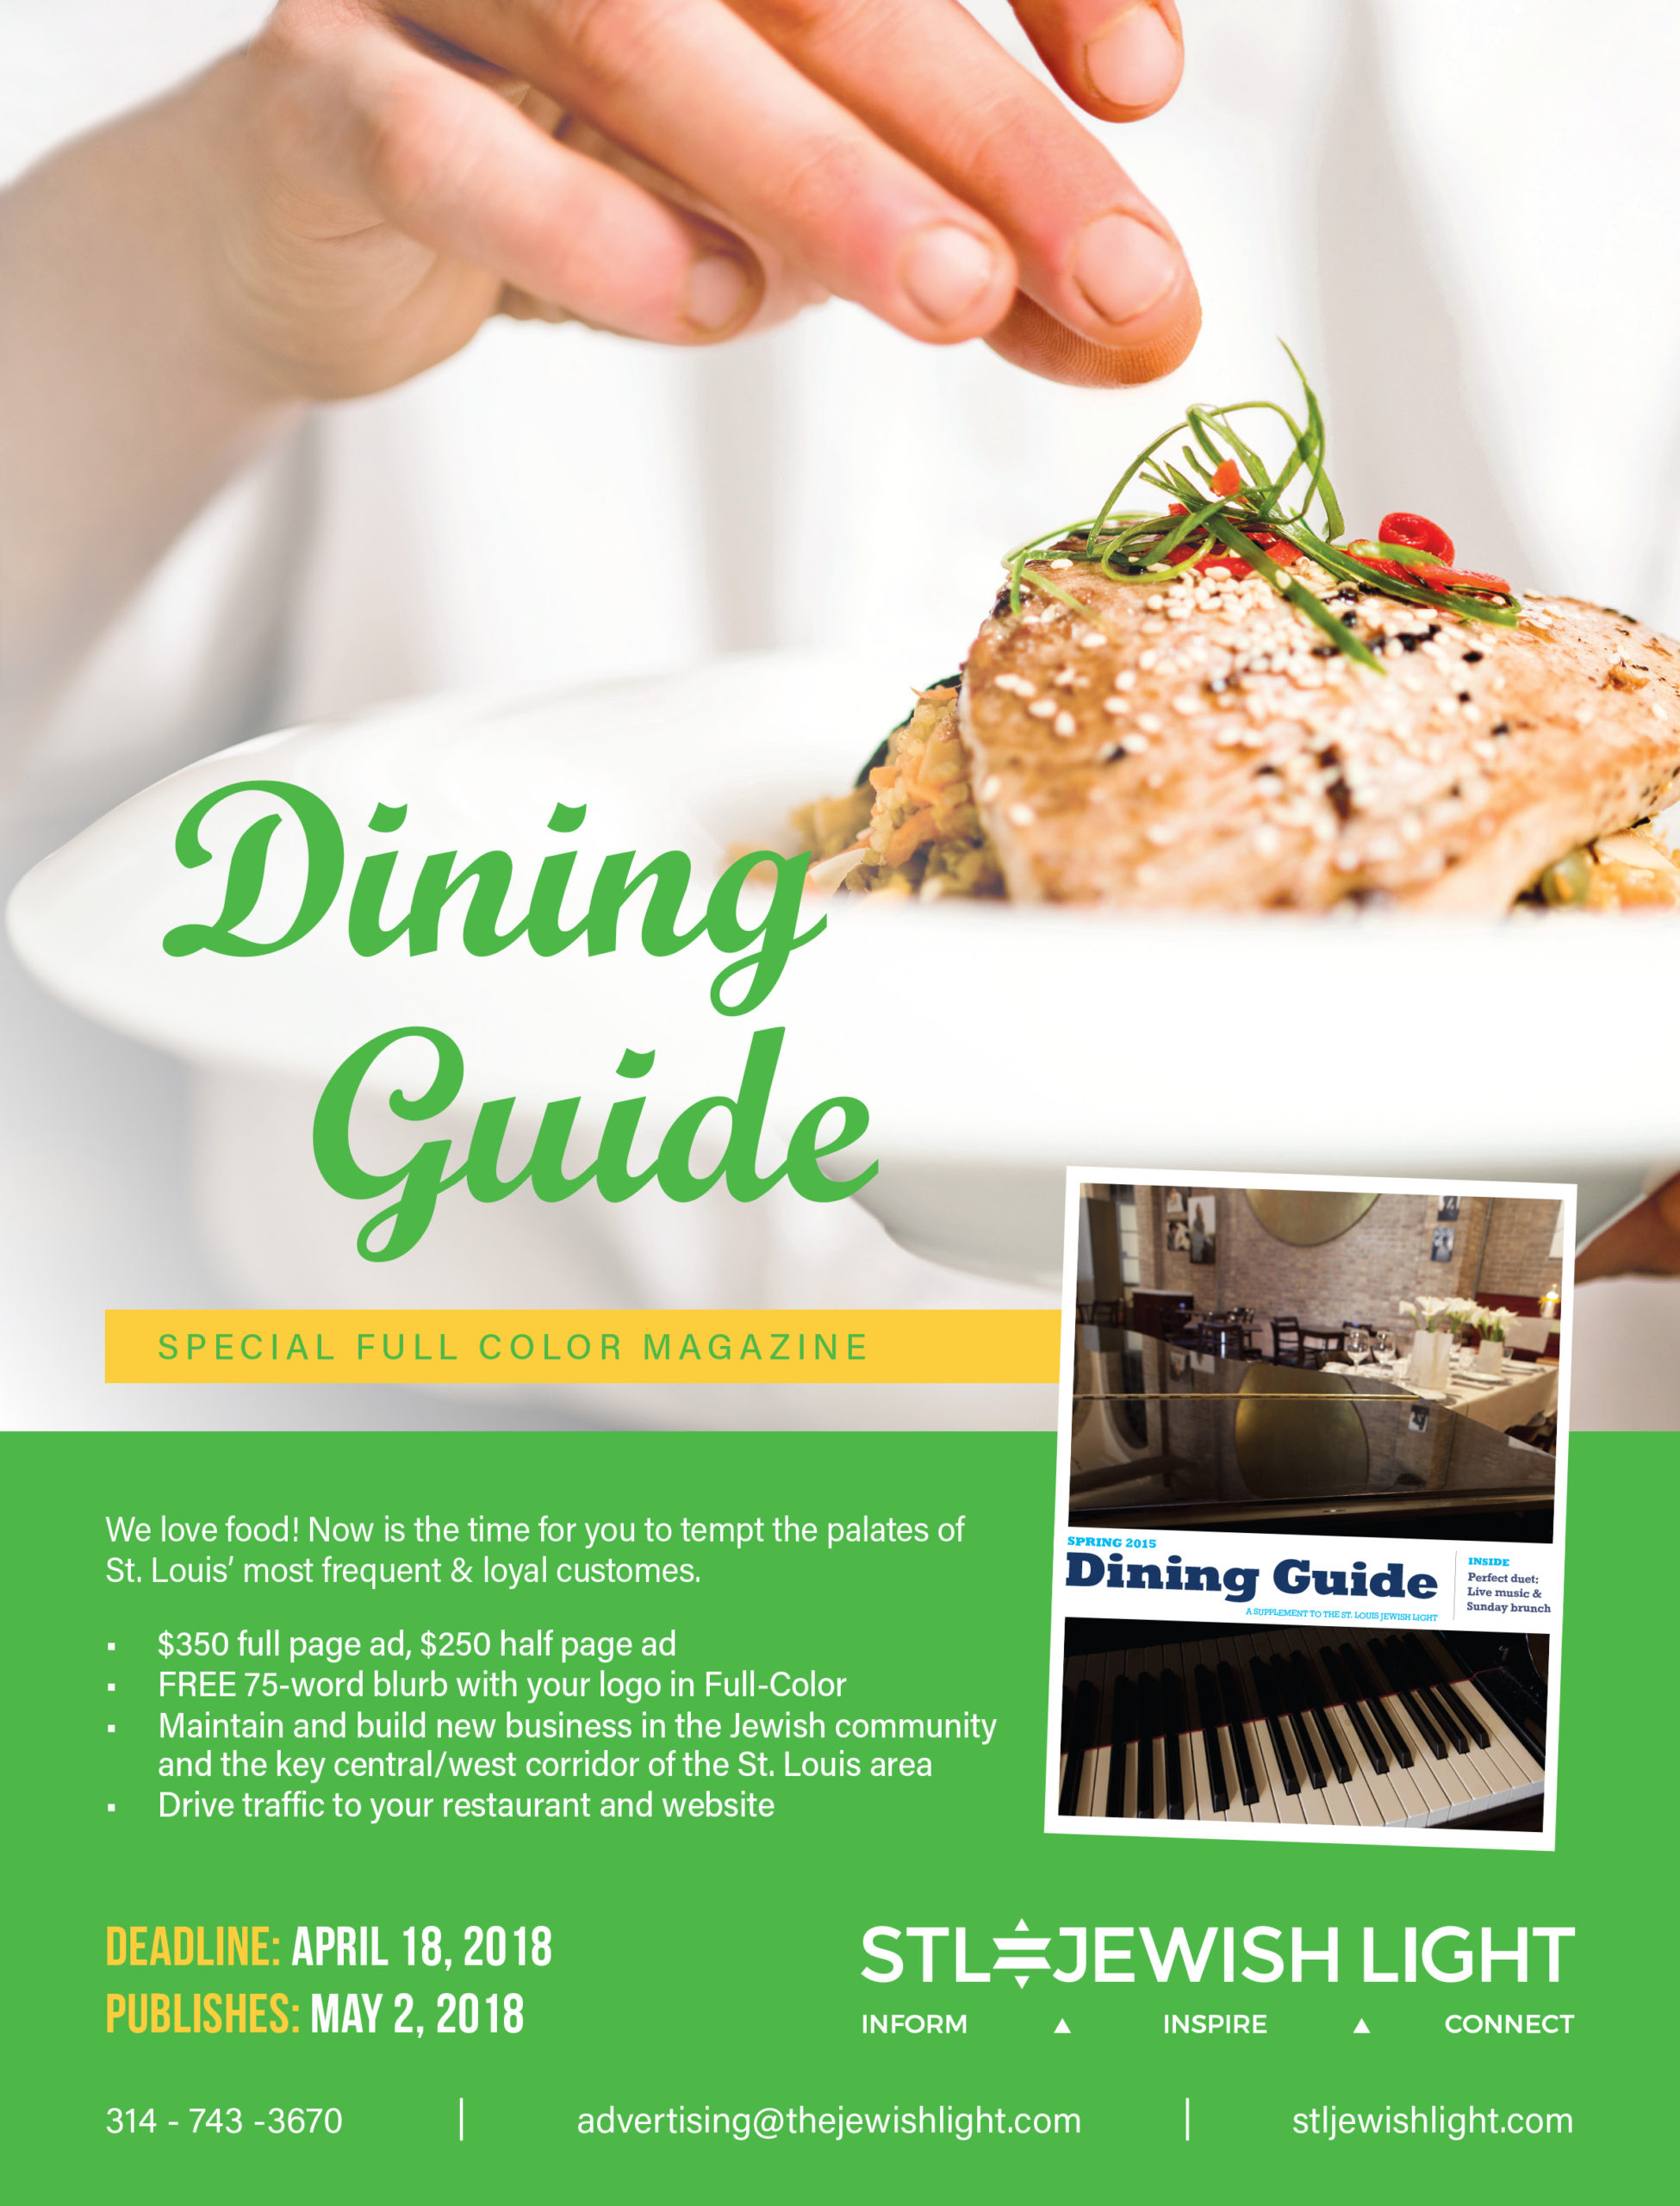 St. Louis Jewish Light - Advertising Design Dining Guide Flyer Portfolio Image - Designs by Martin Holloway